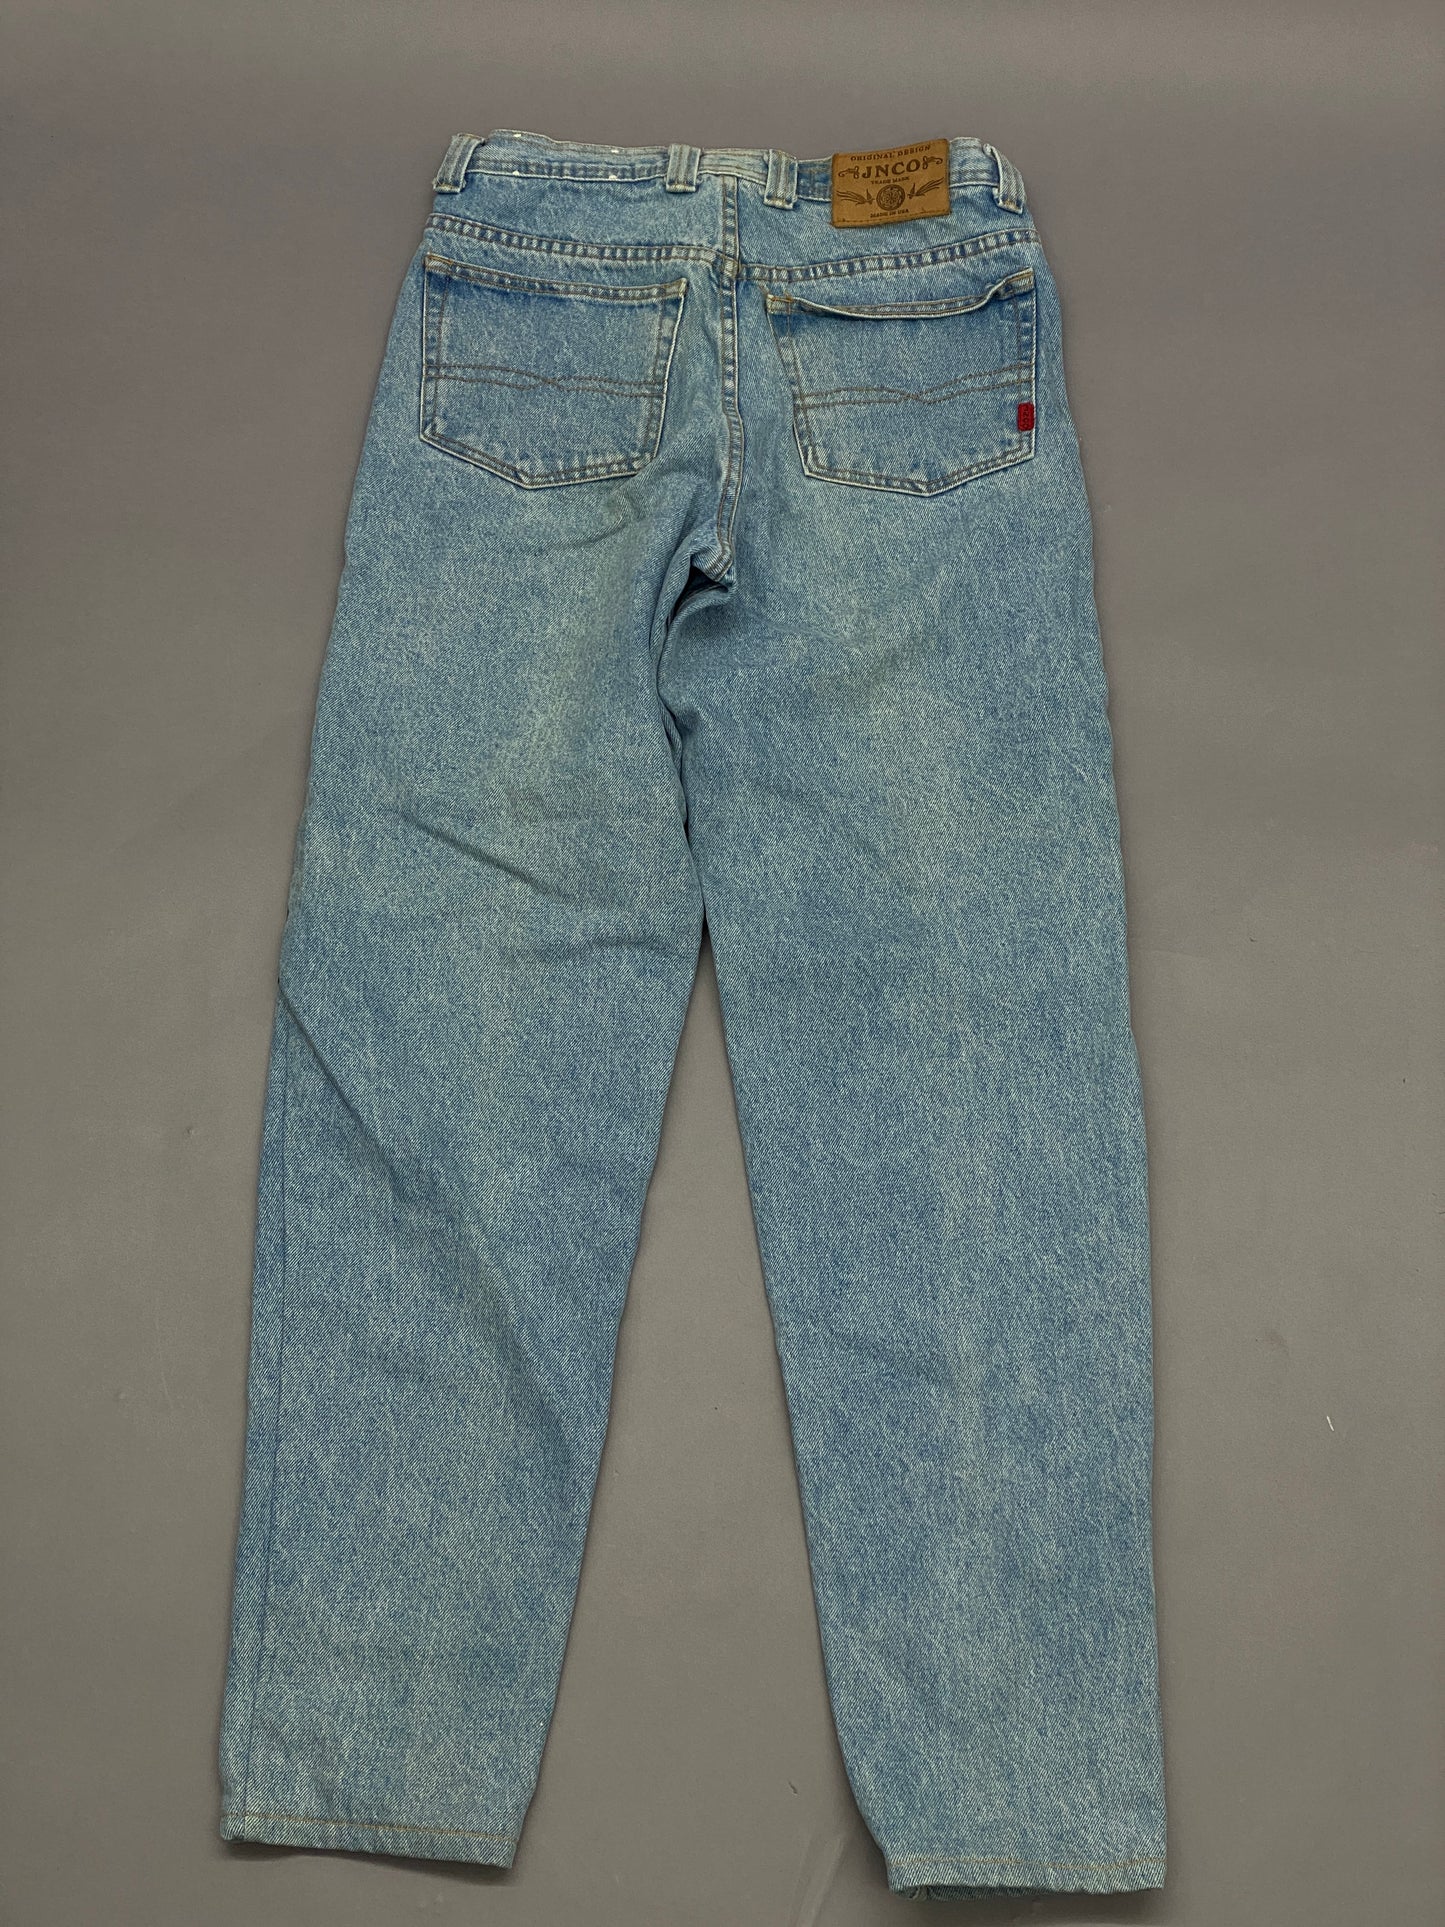 JNCO Double Knee Vintage Jeans - 31